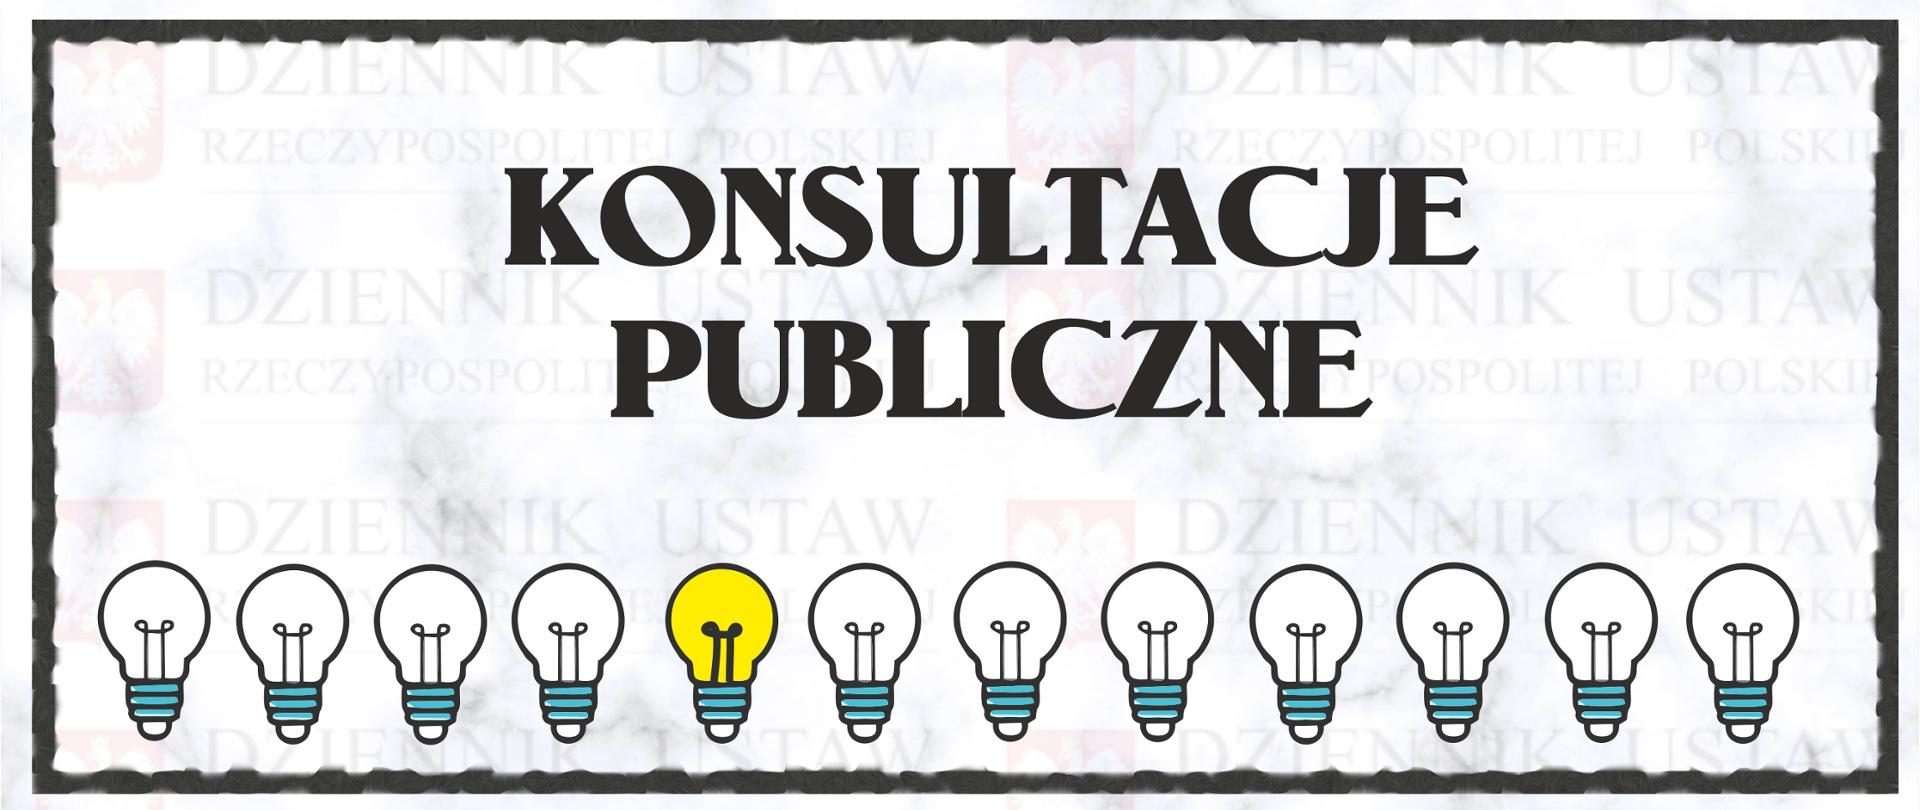 Konsultacje publiczne